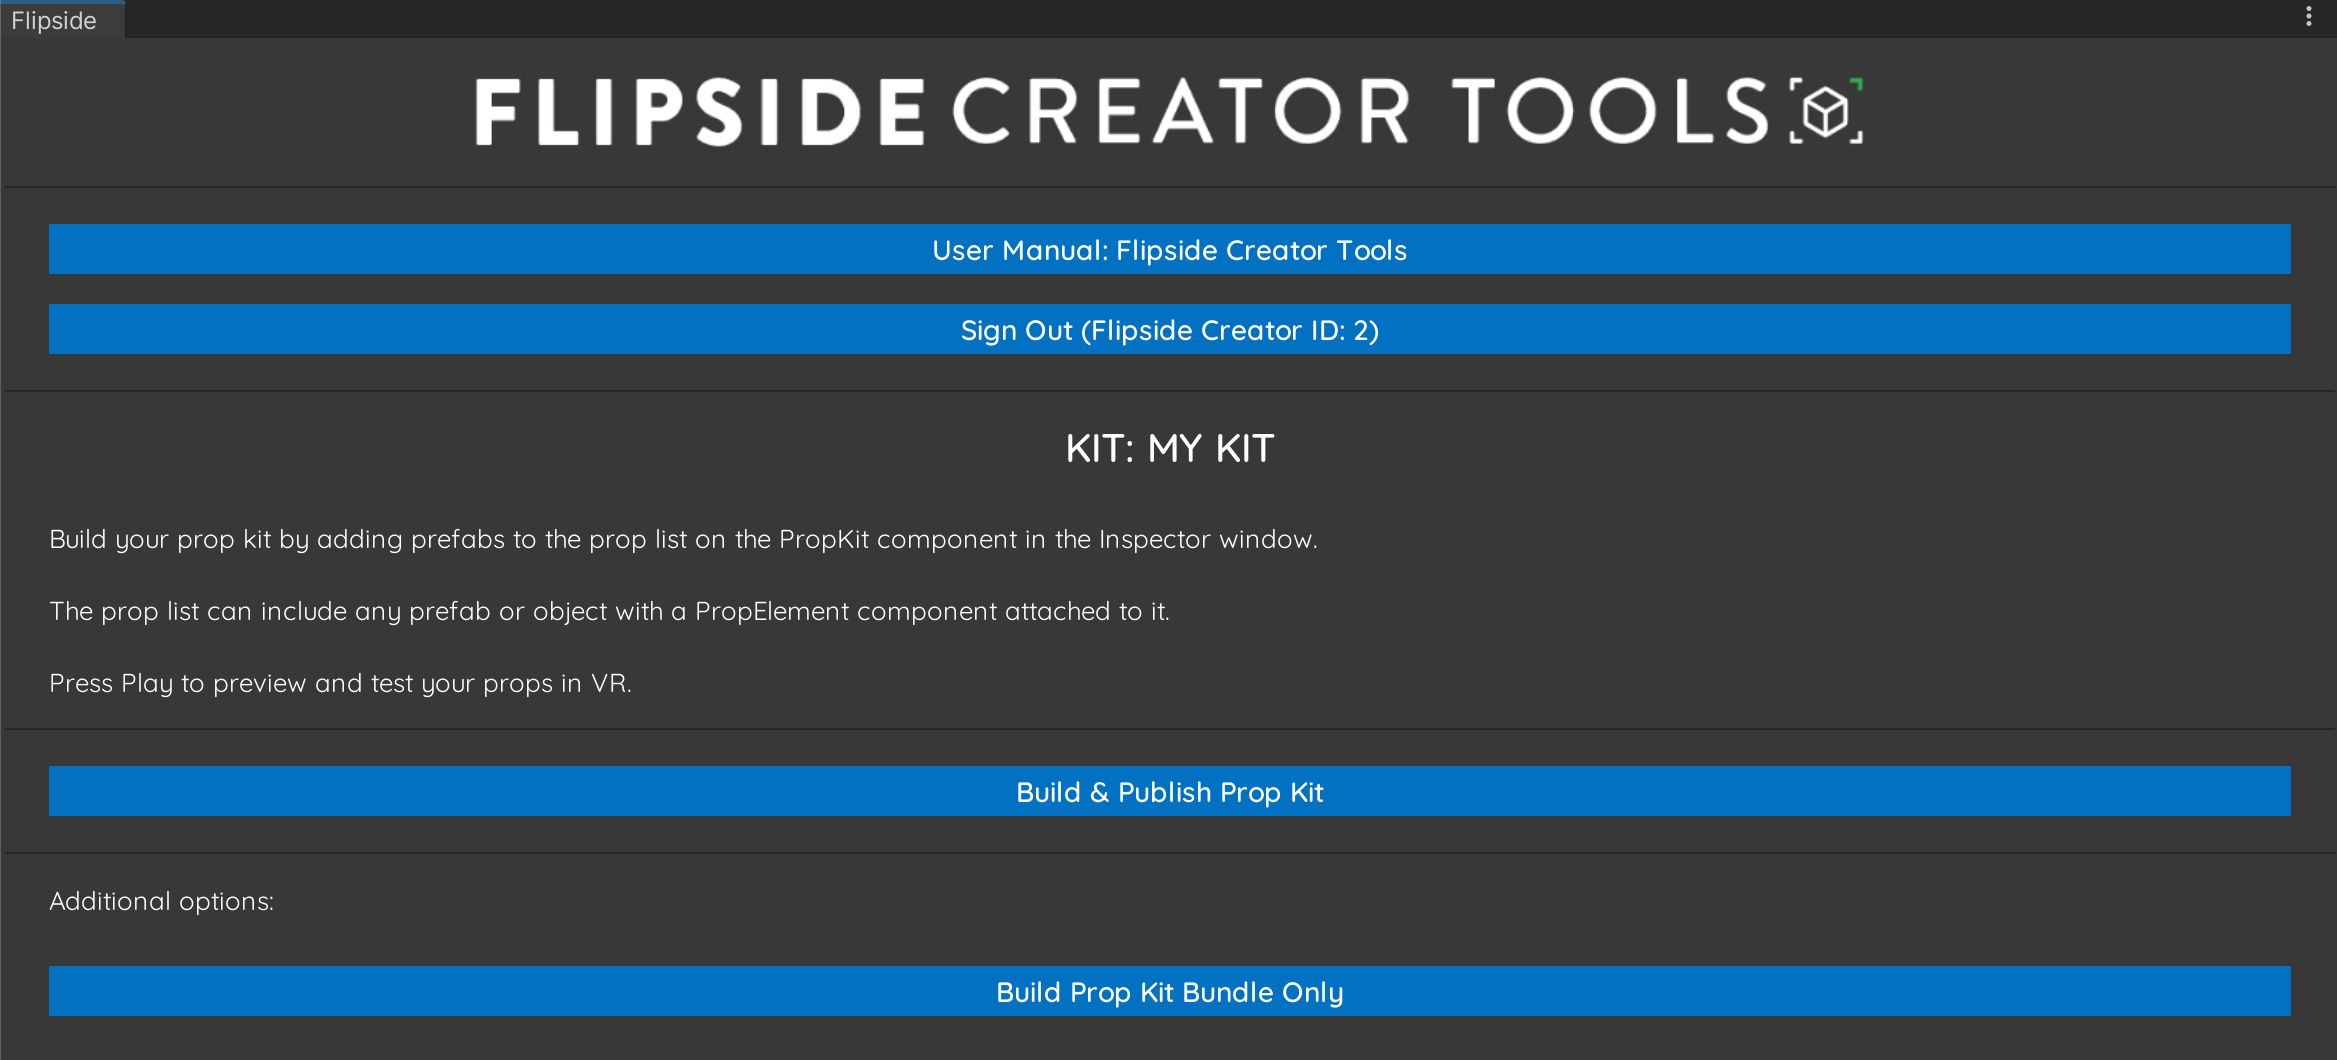 Flipside Creator Tools - Build & Publish Prop Kit